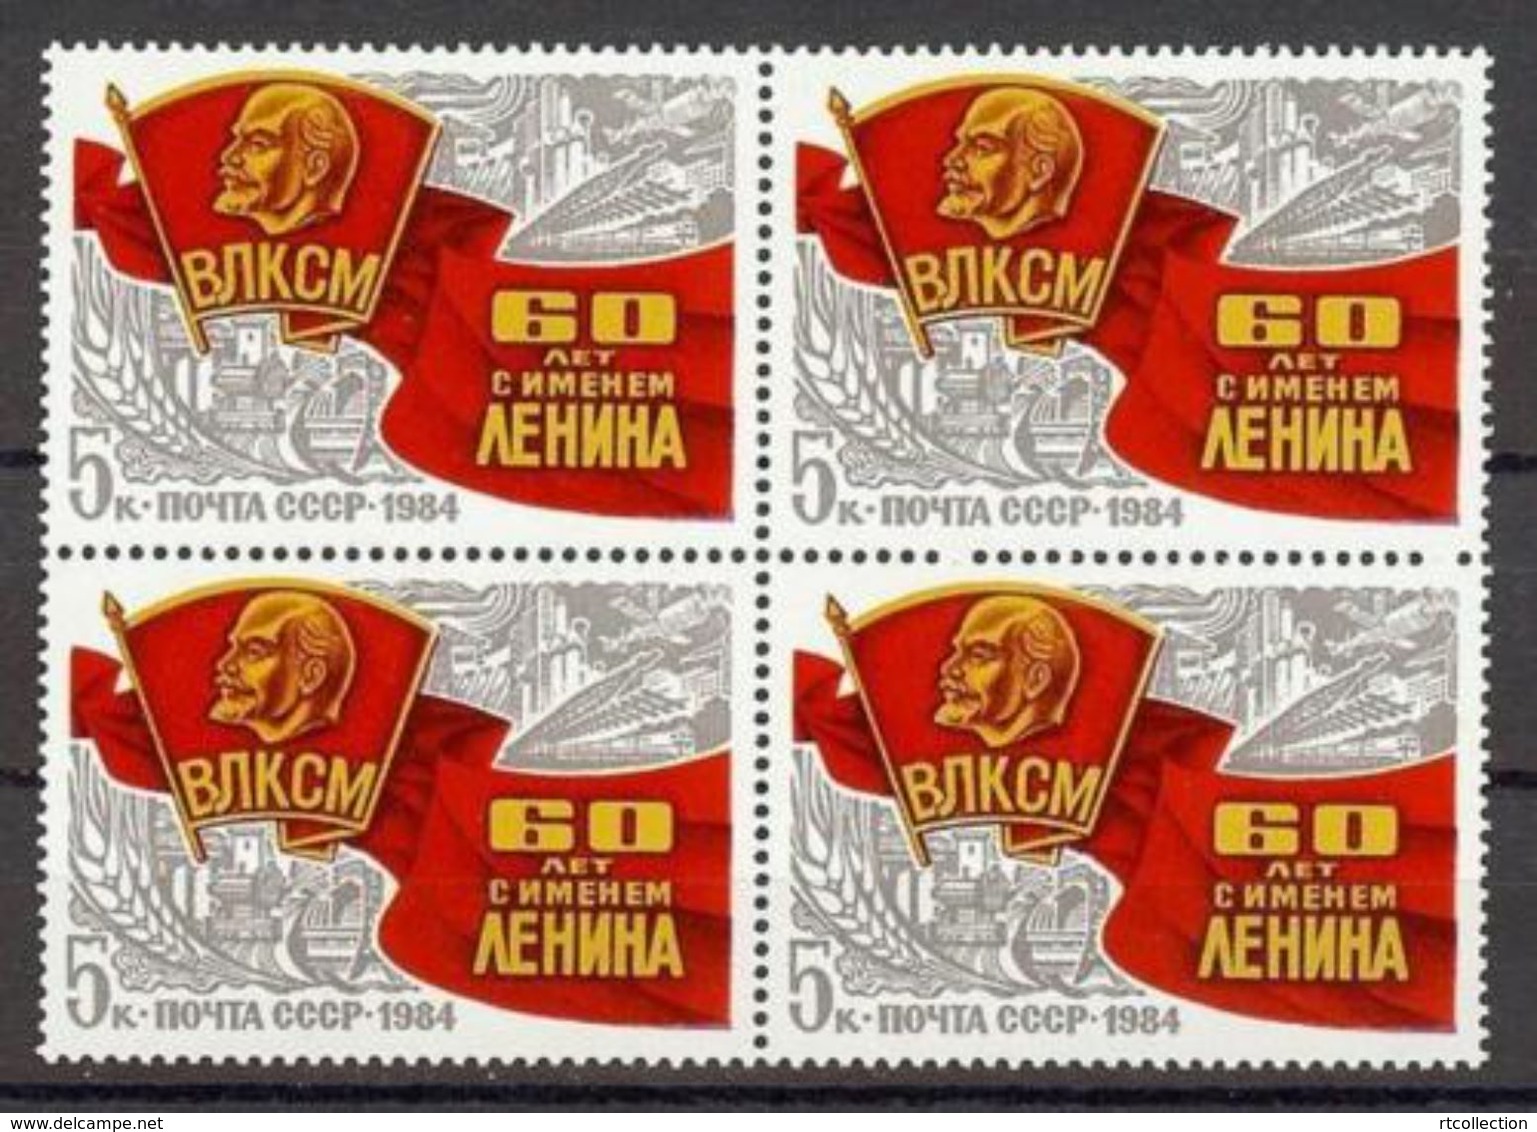 USSR Russia 1984 Block 60th Anniv Naming Komsomol Lenin Famous People Politician Celebrations Flag Stamps MNH Sc#5272 - Stamps